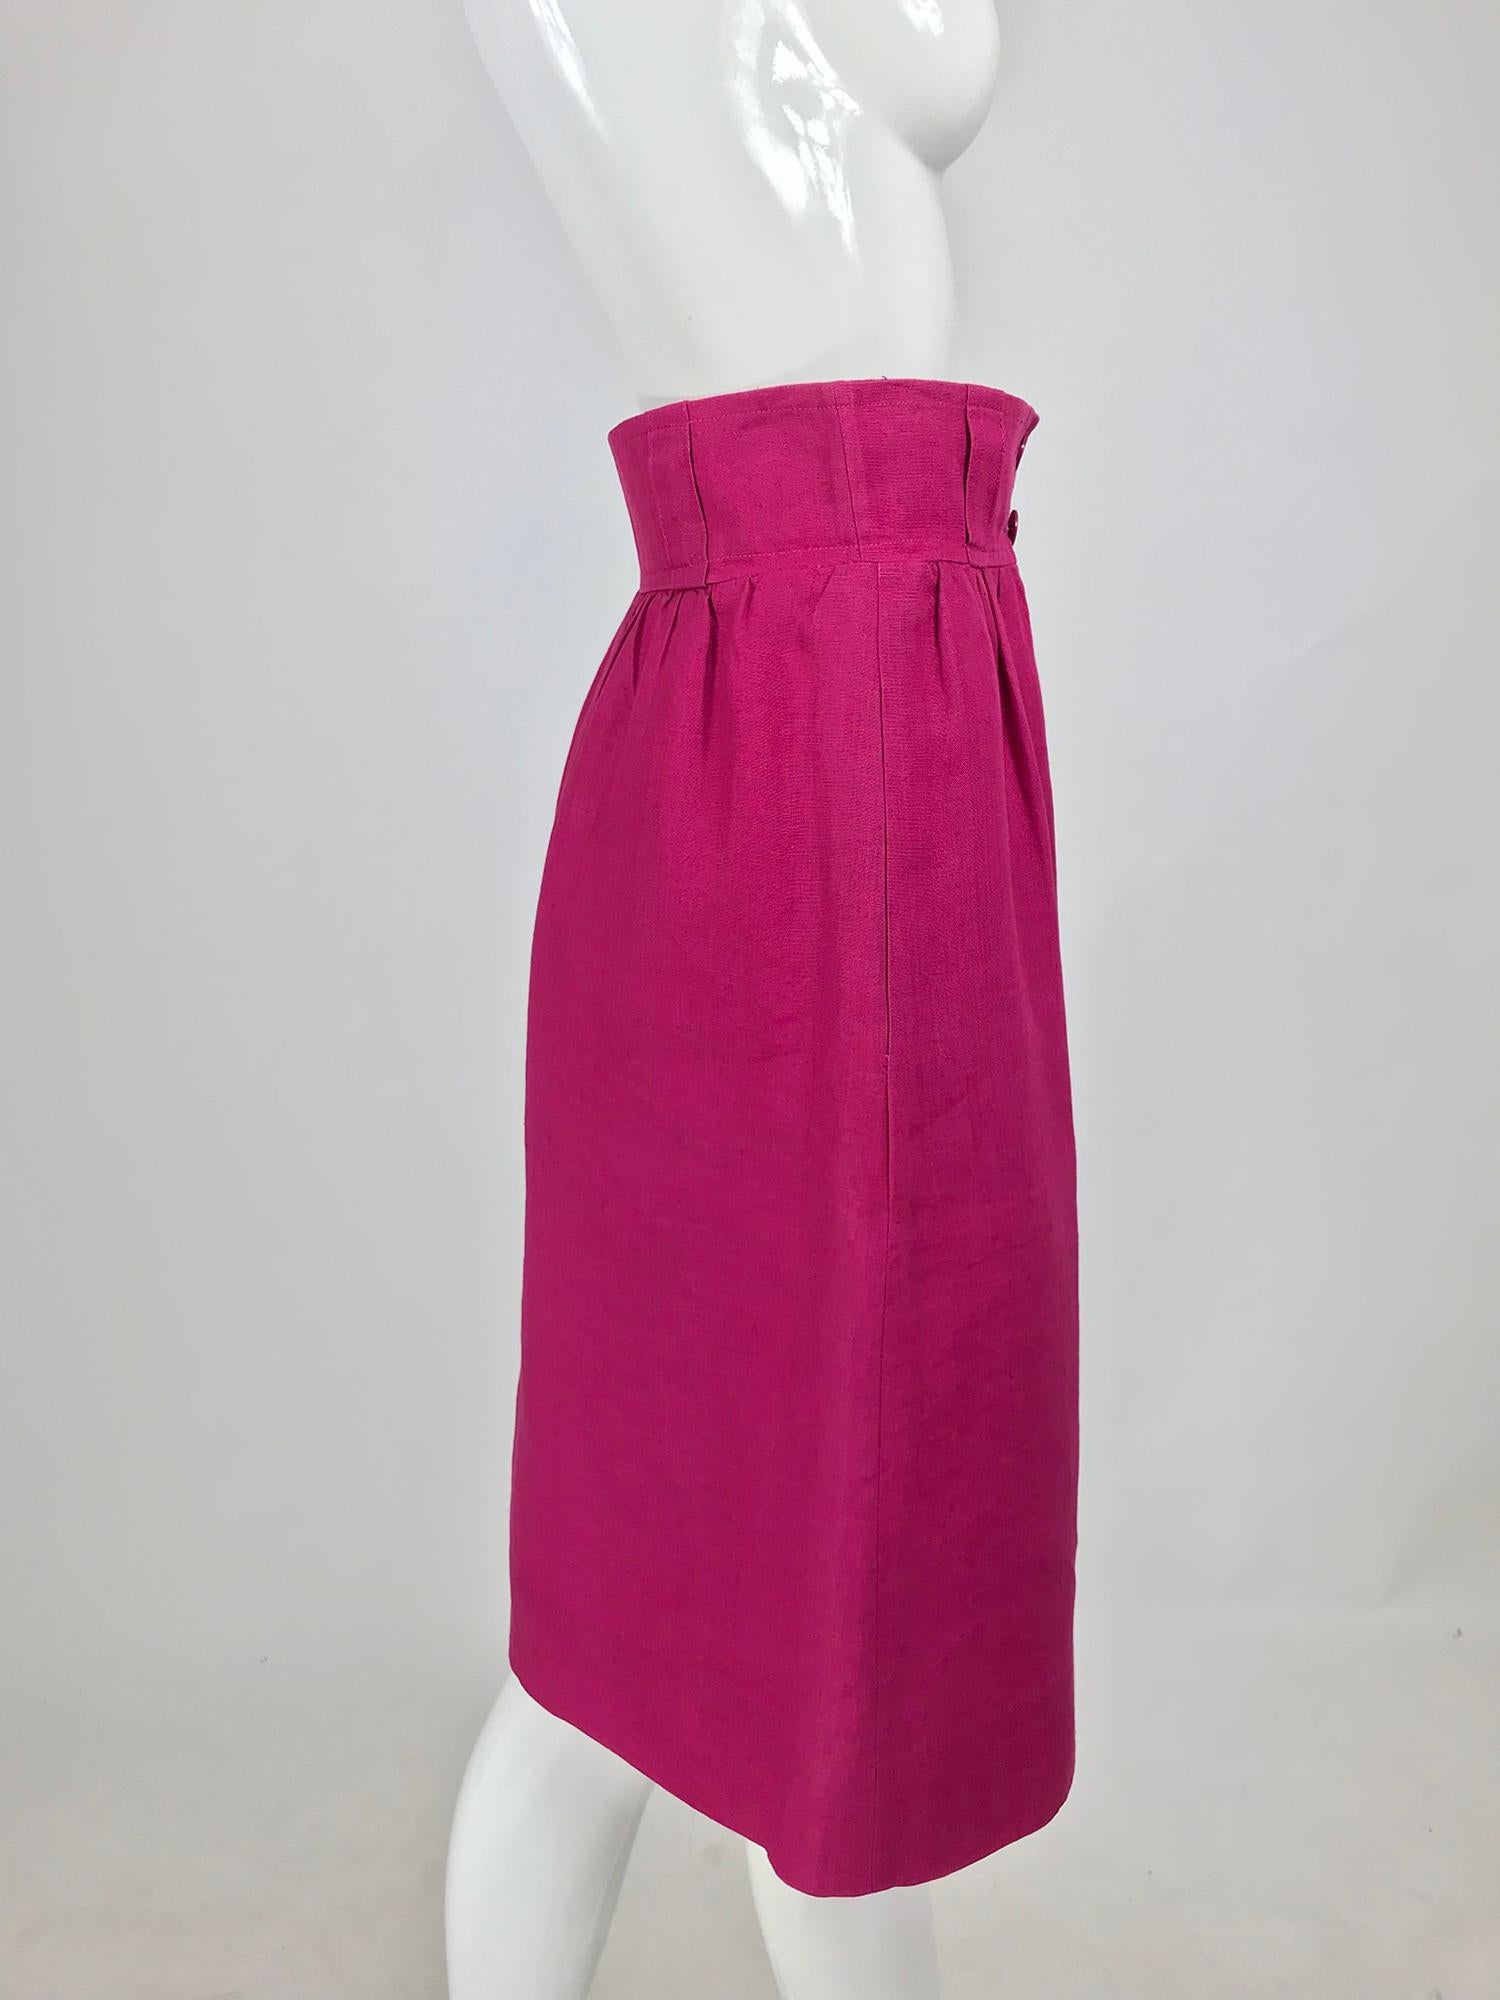 Women's Givenchy Hot Pink Linen Skirt 1980s